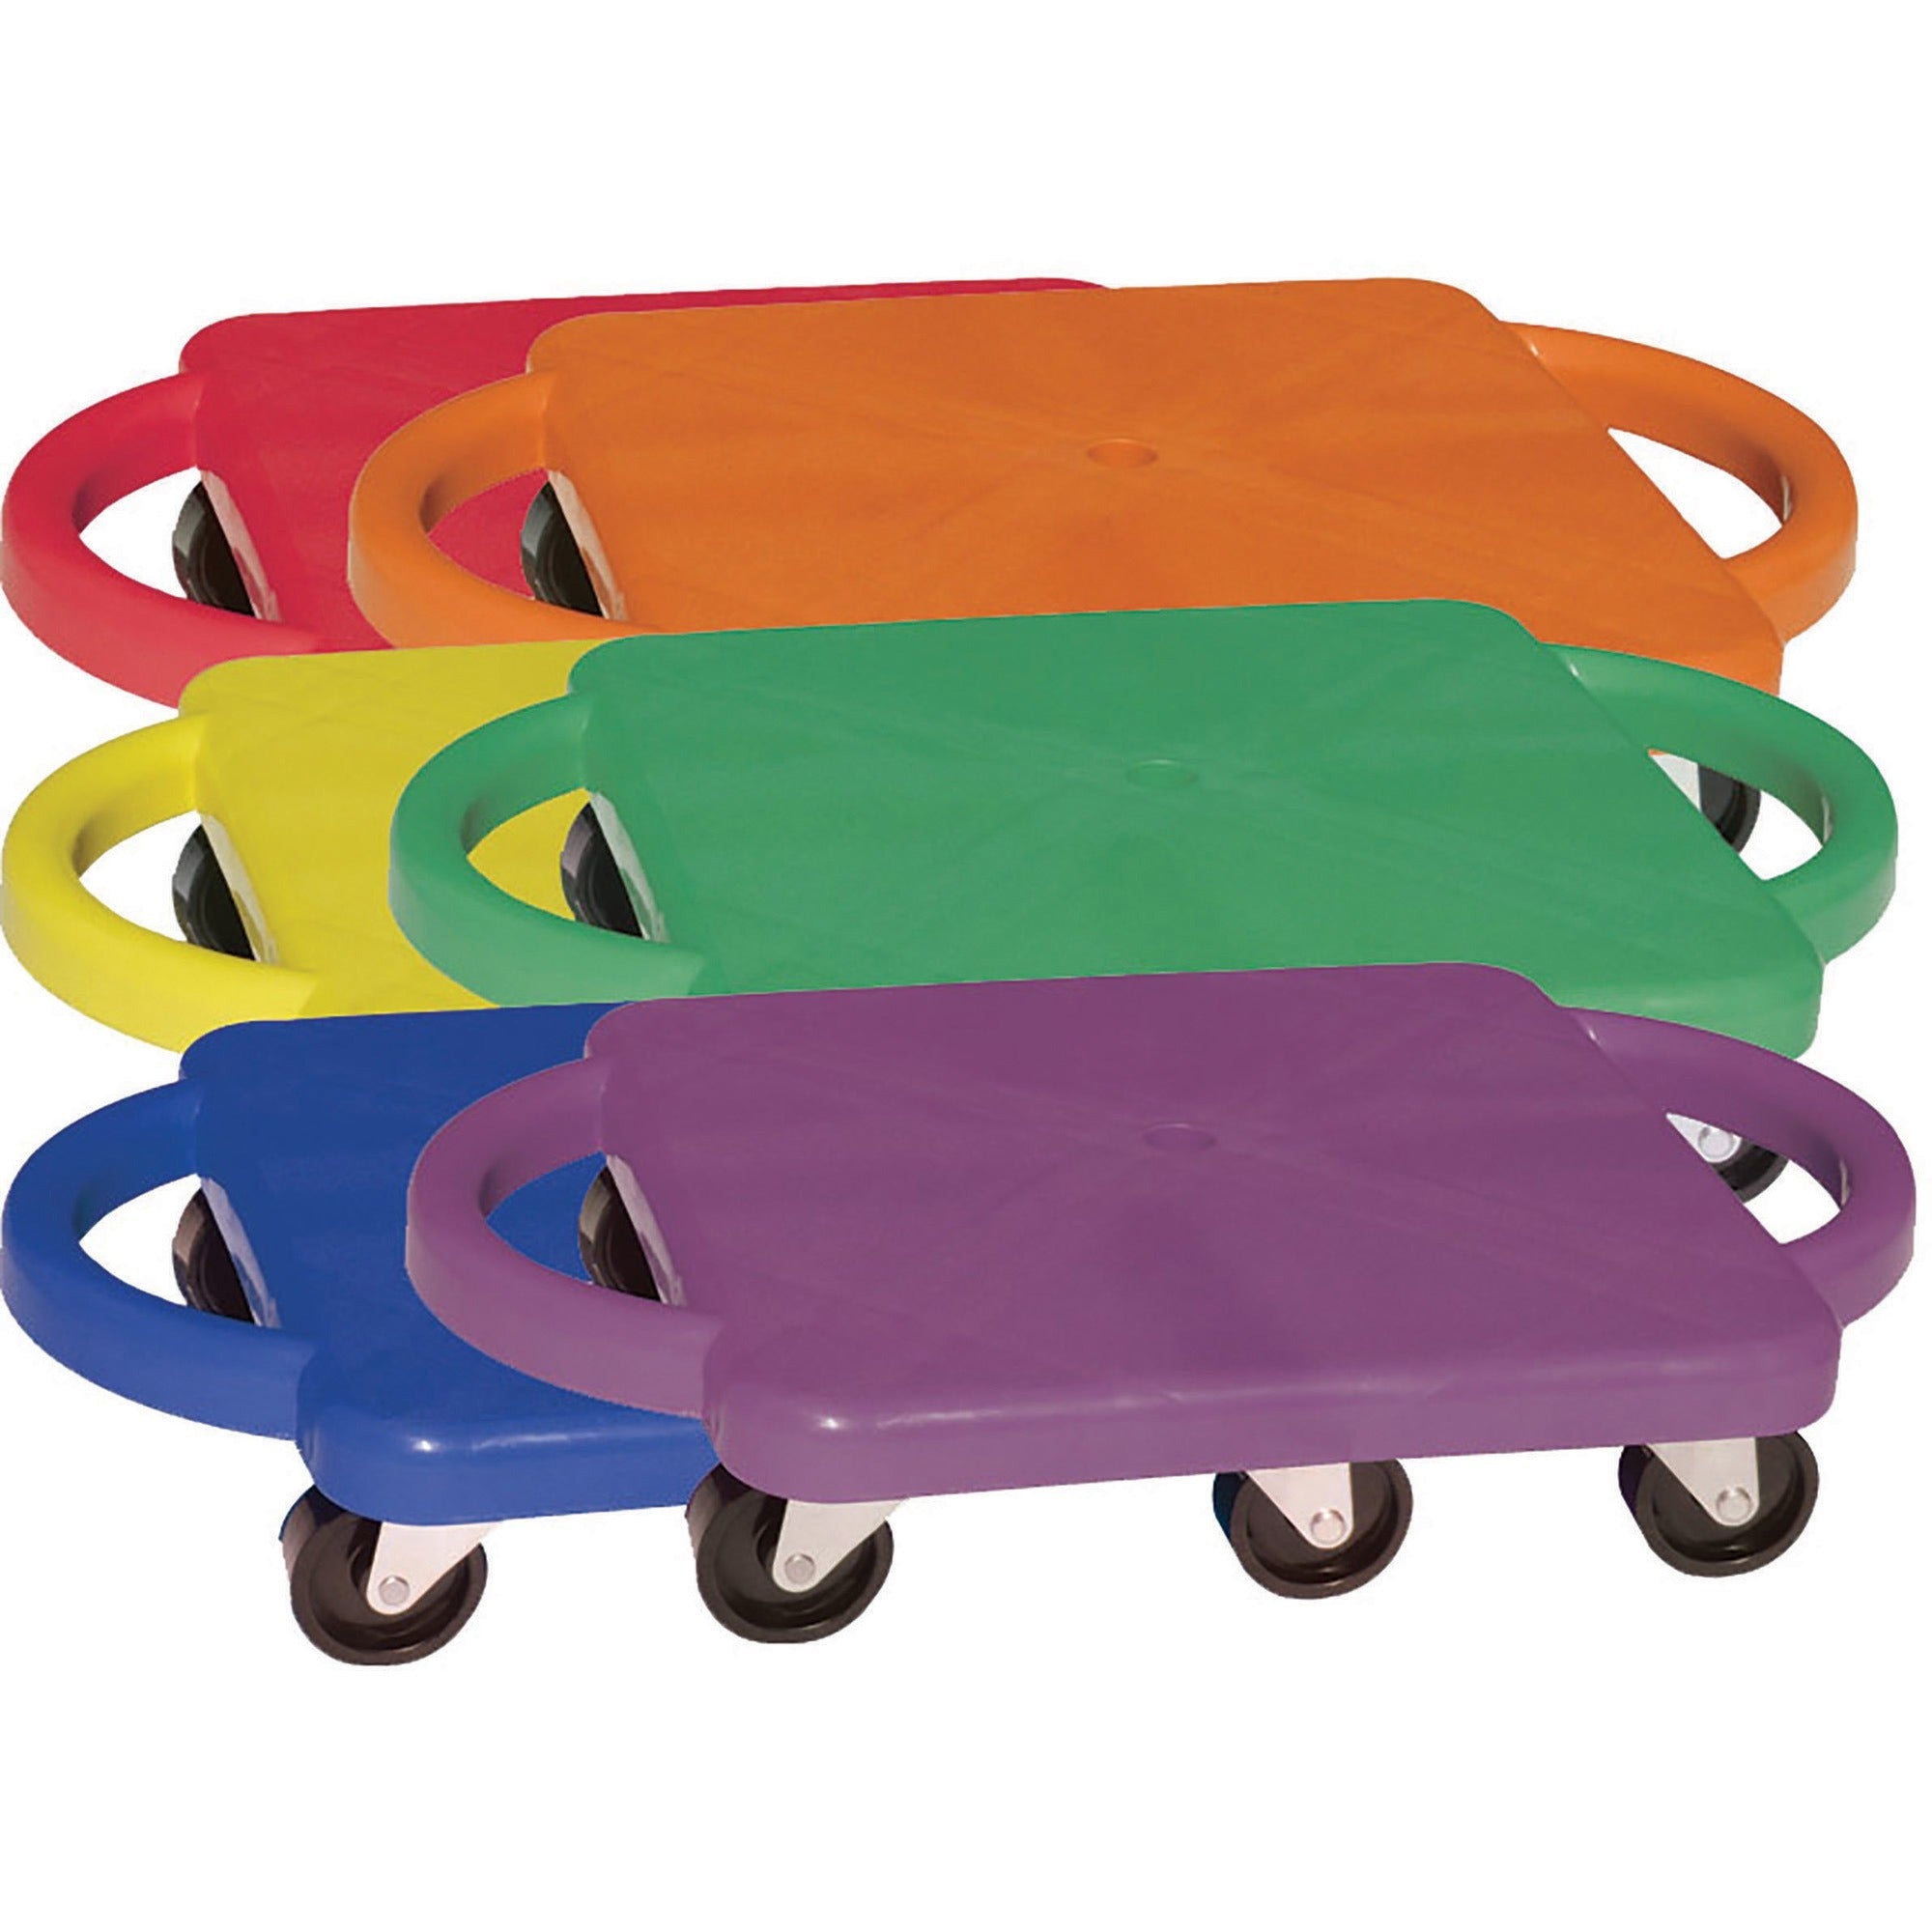 Champion Sports Standard Scooter Set w/Handles - Blue, Green, Orange, Red, Yellow, Purple - Plastic - 